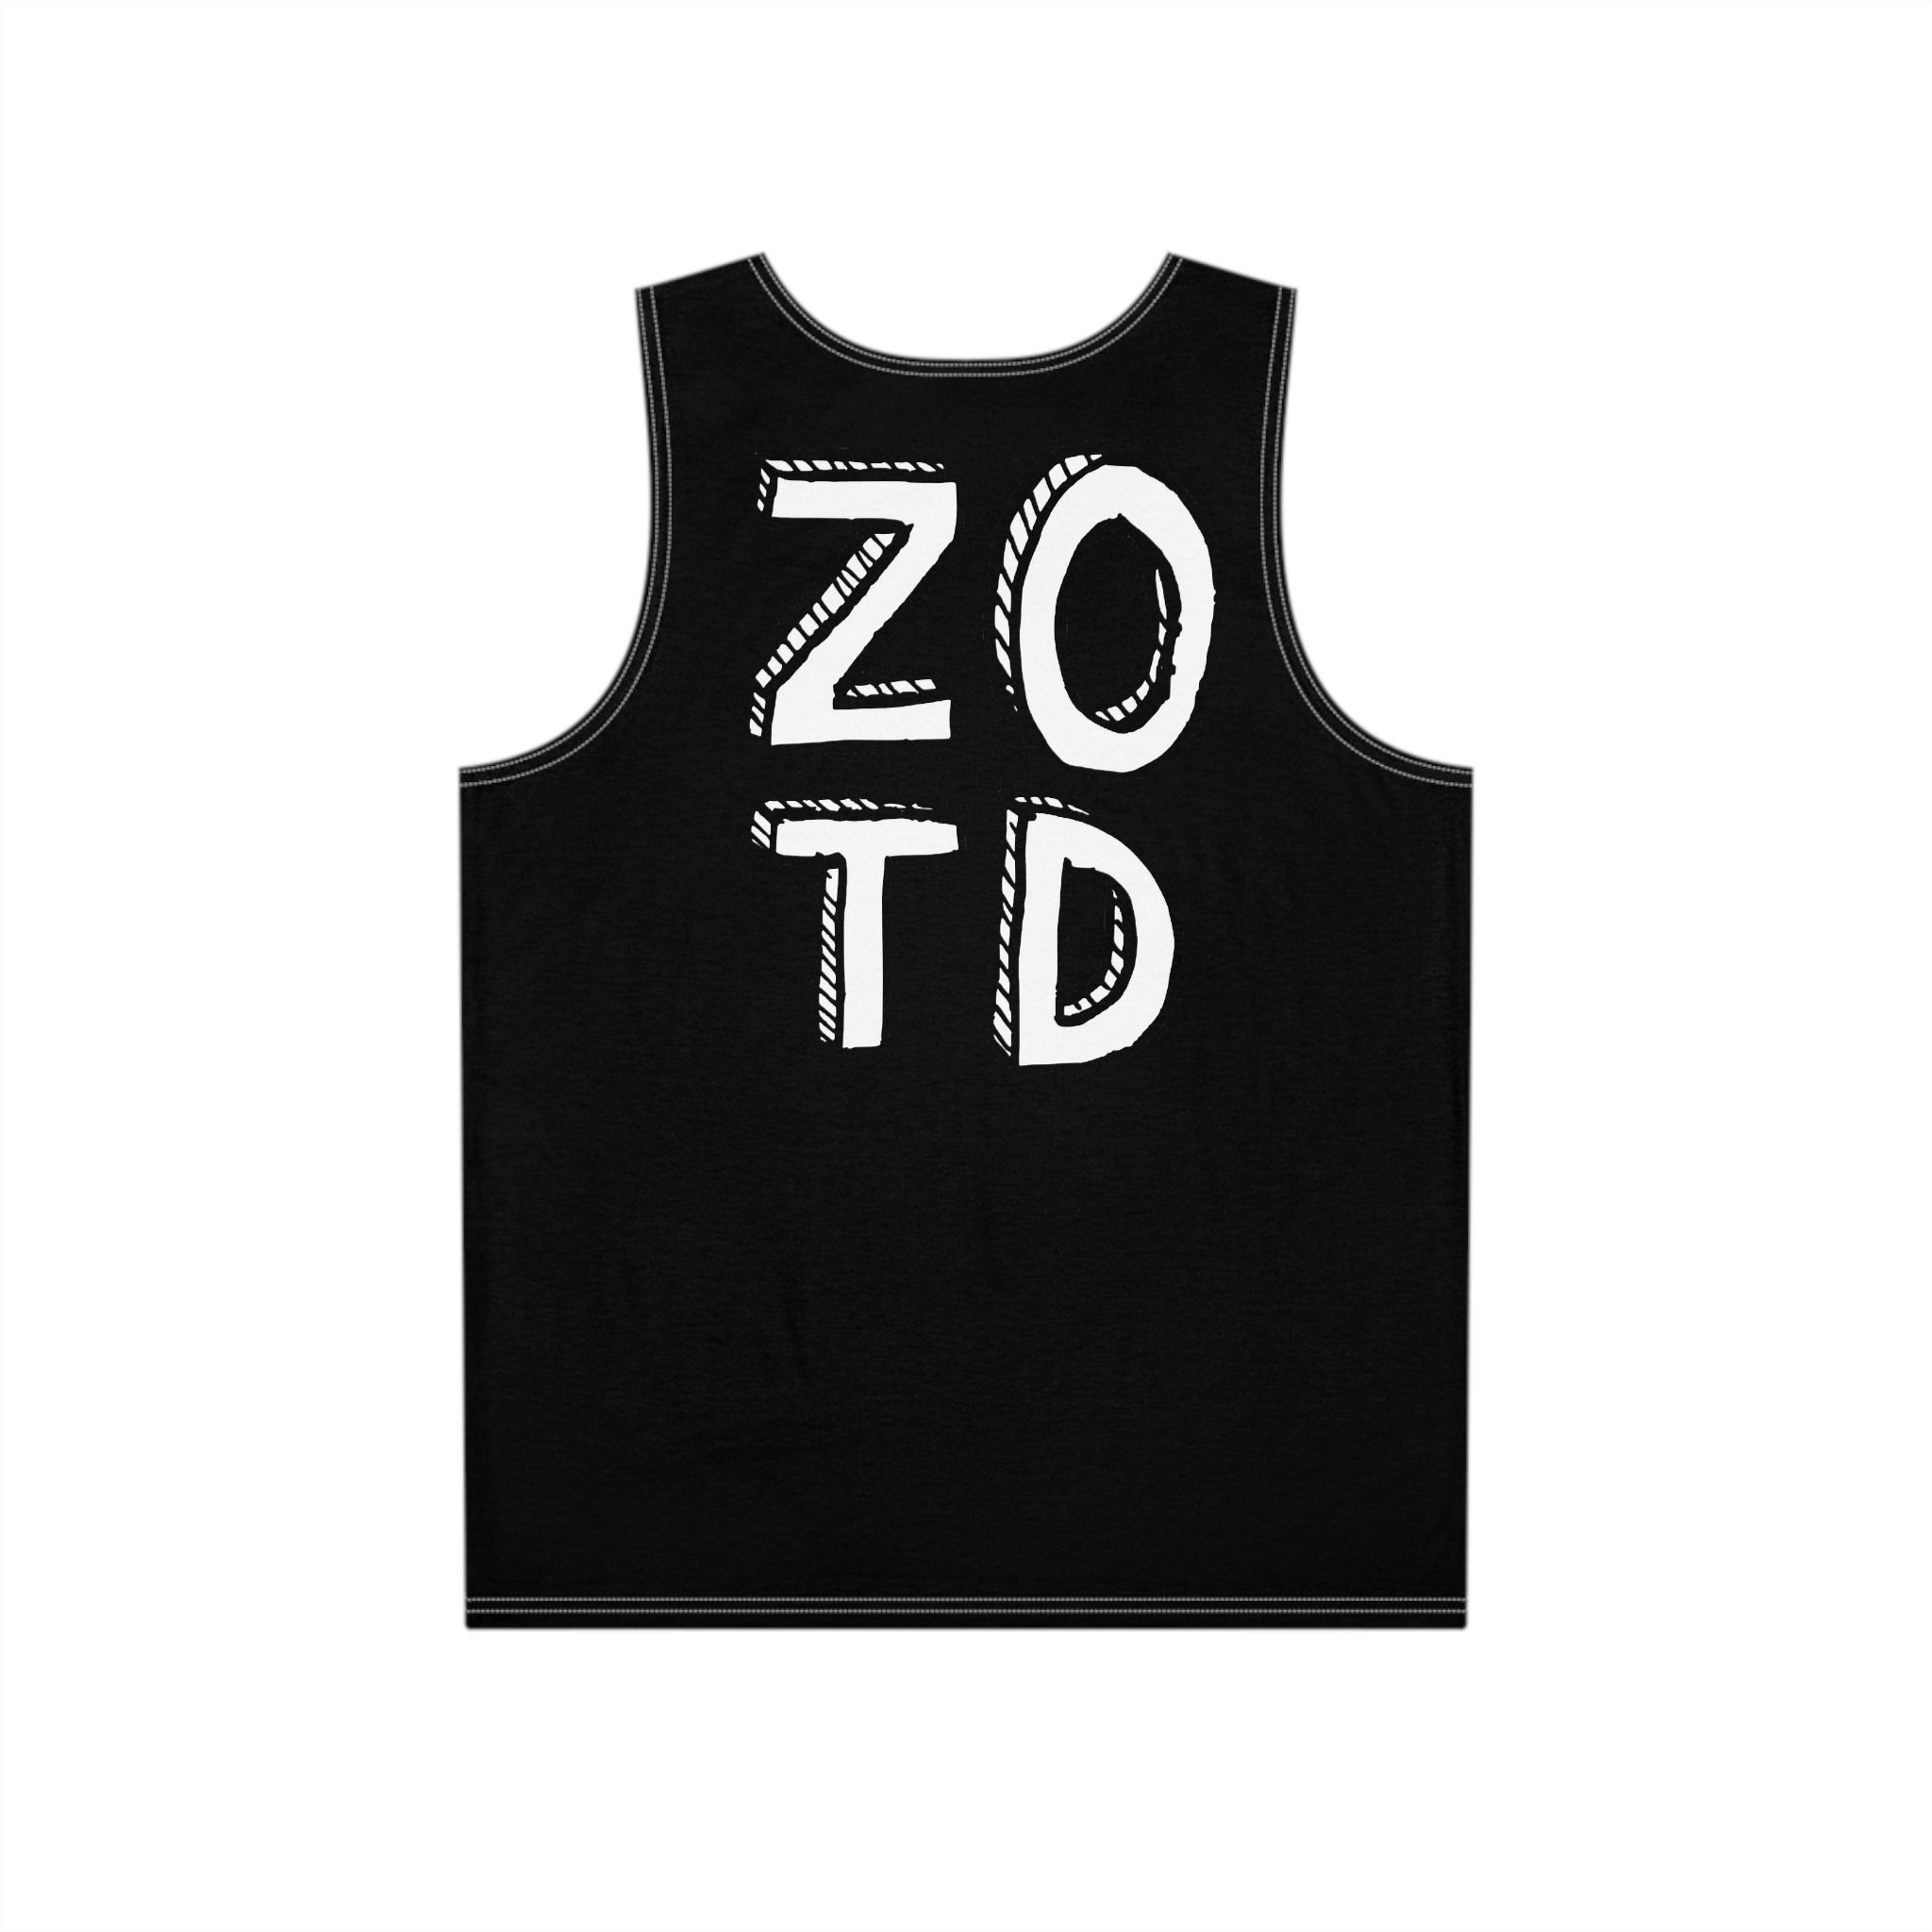 ZOTD (Black) - Men's All Over Print Tank